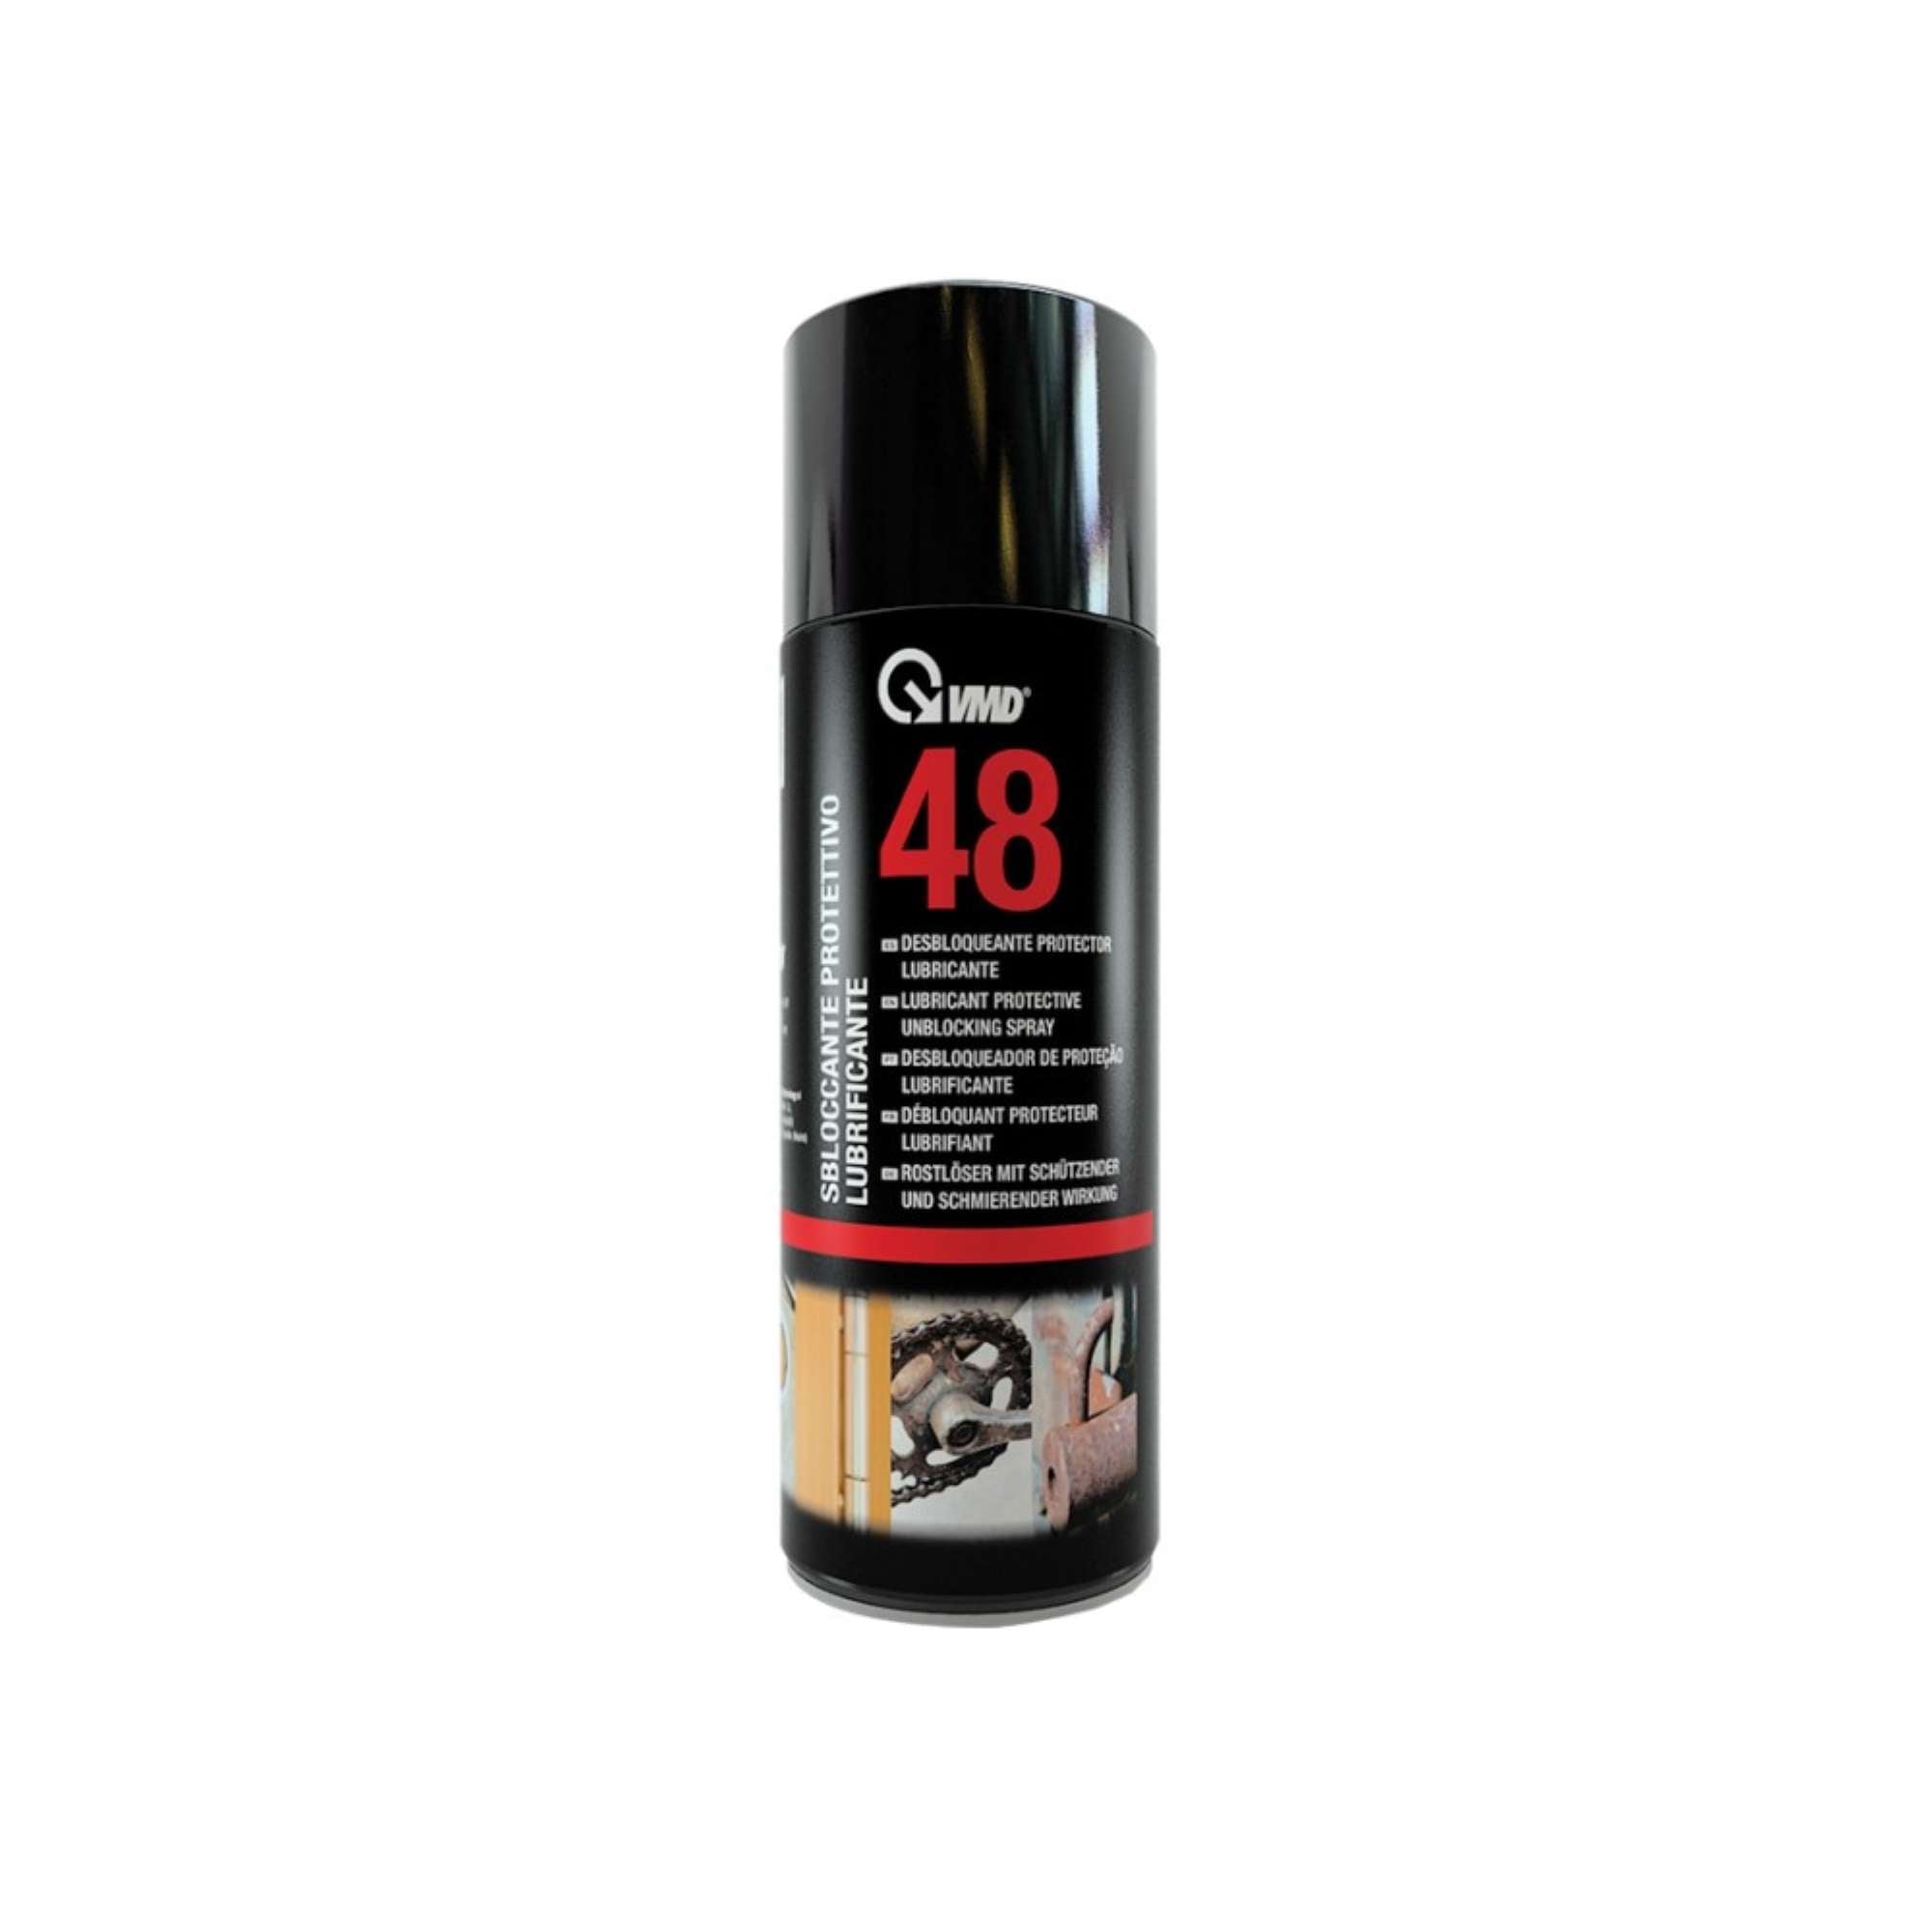 Protective Unlocking Spray 400ml - VMD 48